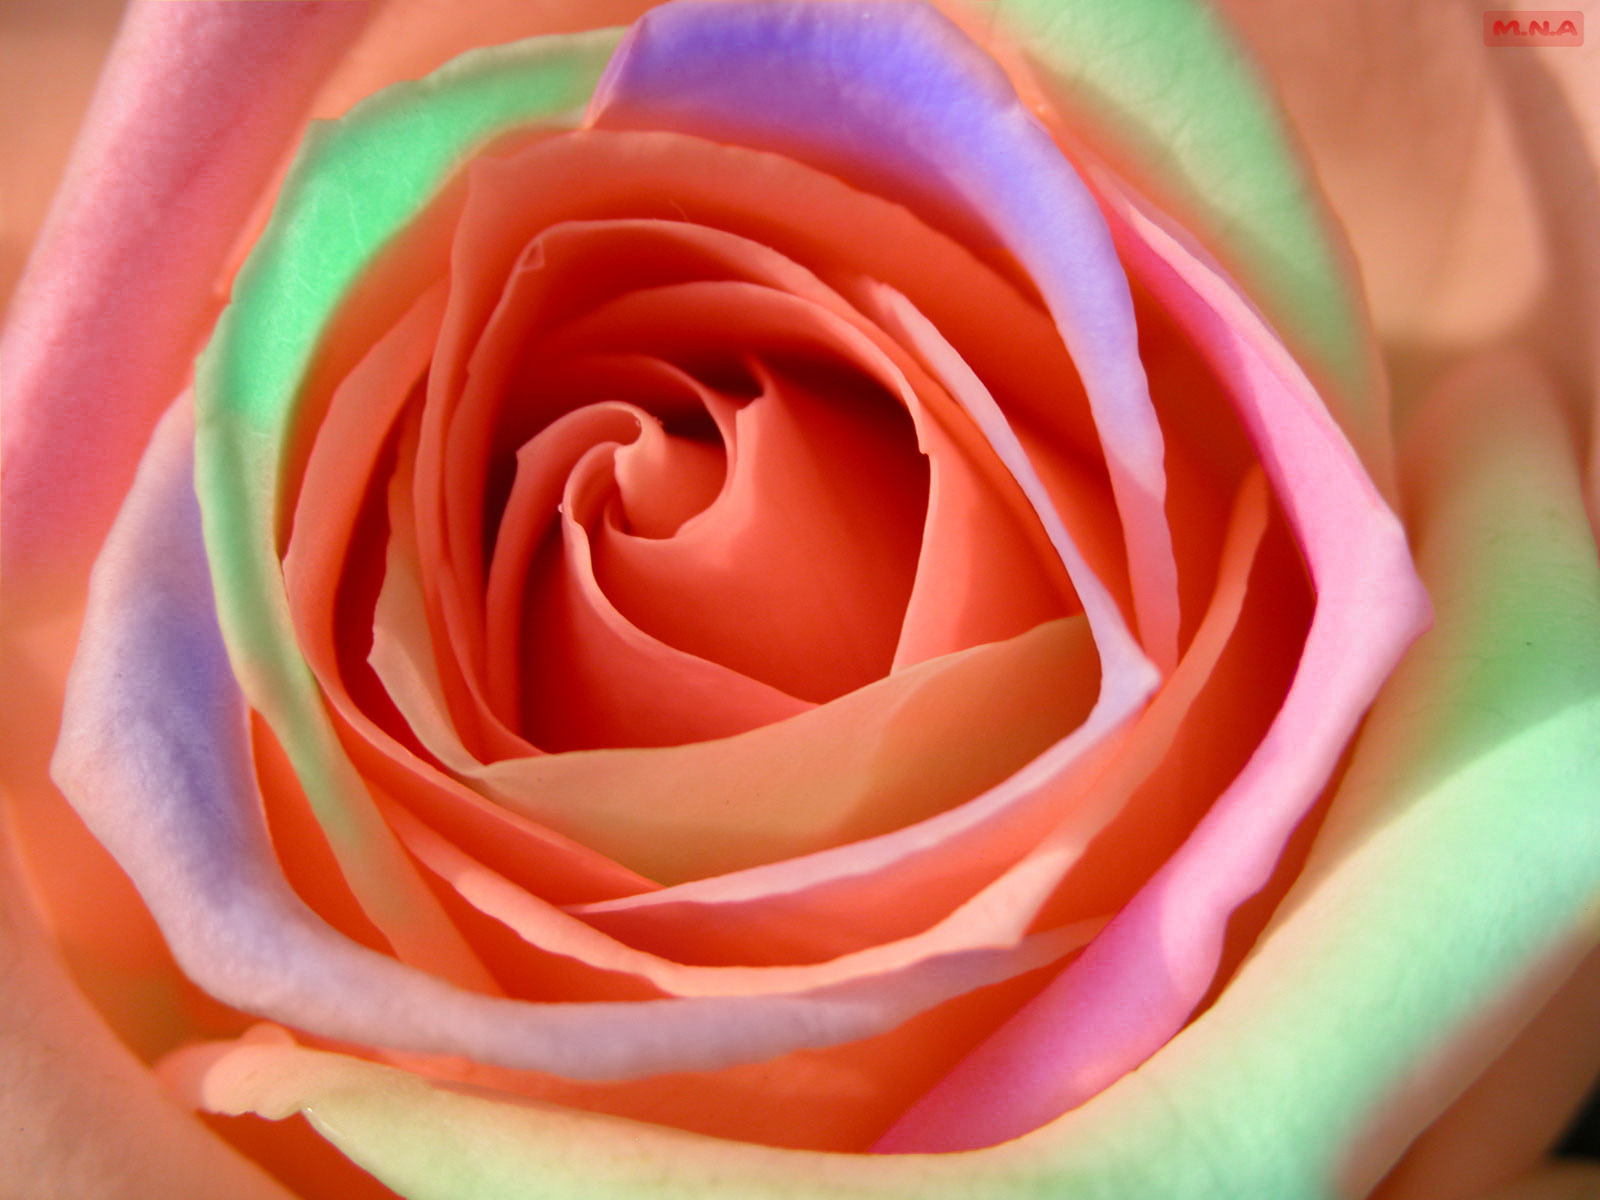 Rose Flower Wallpaper Download - 1080p Rose Image Hd - HD Wallpaper 